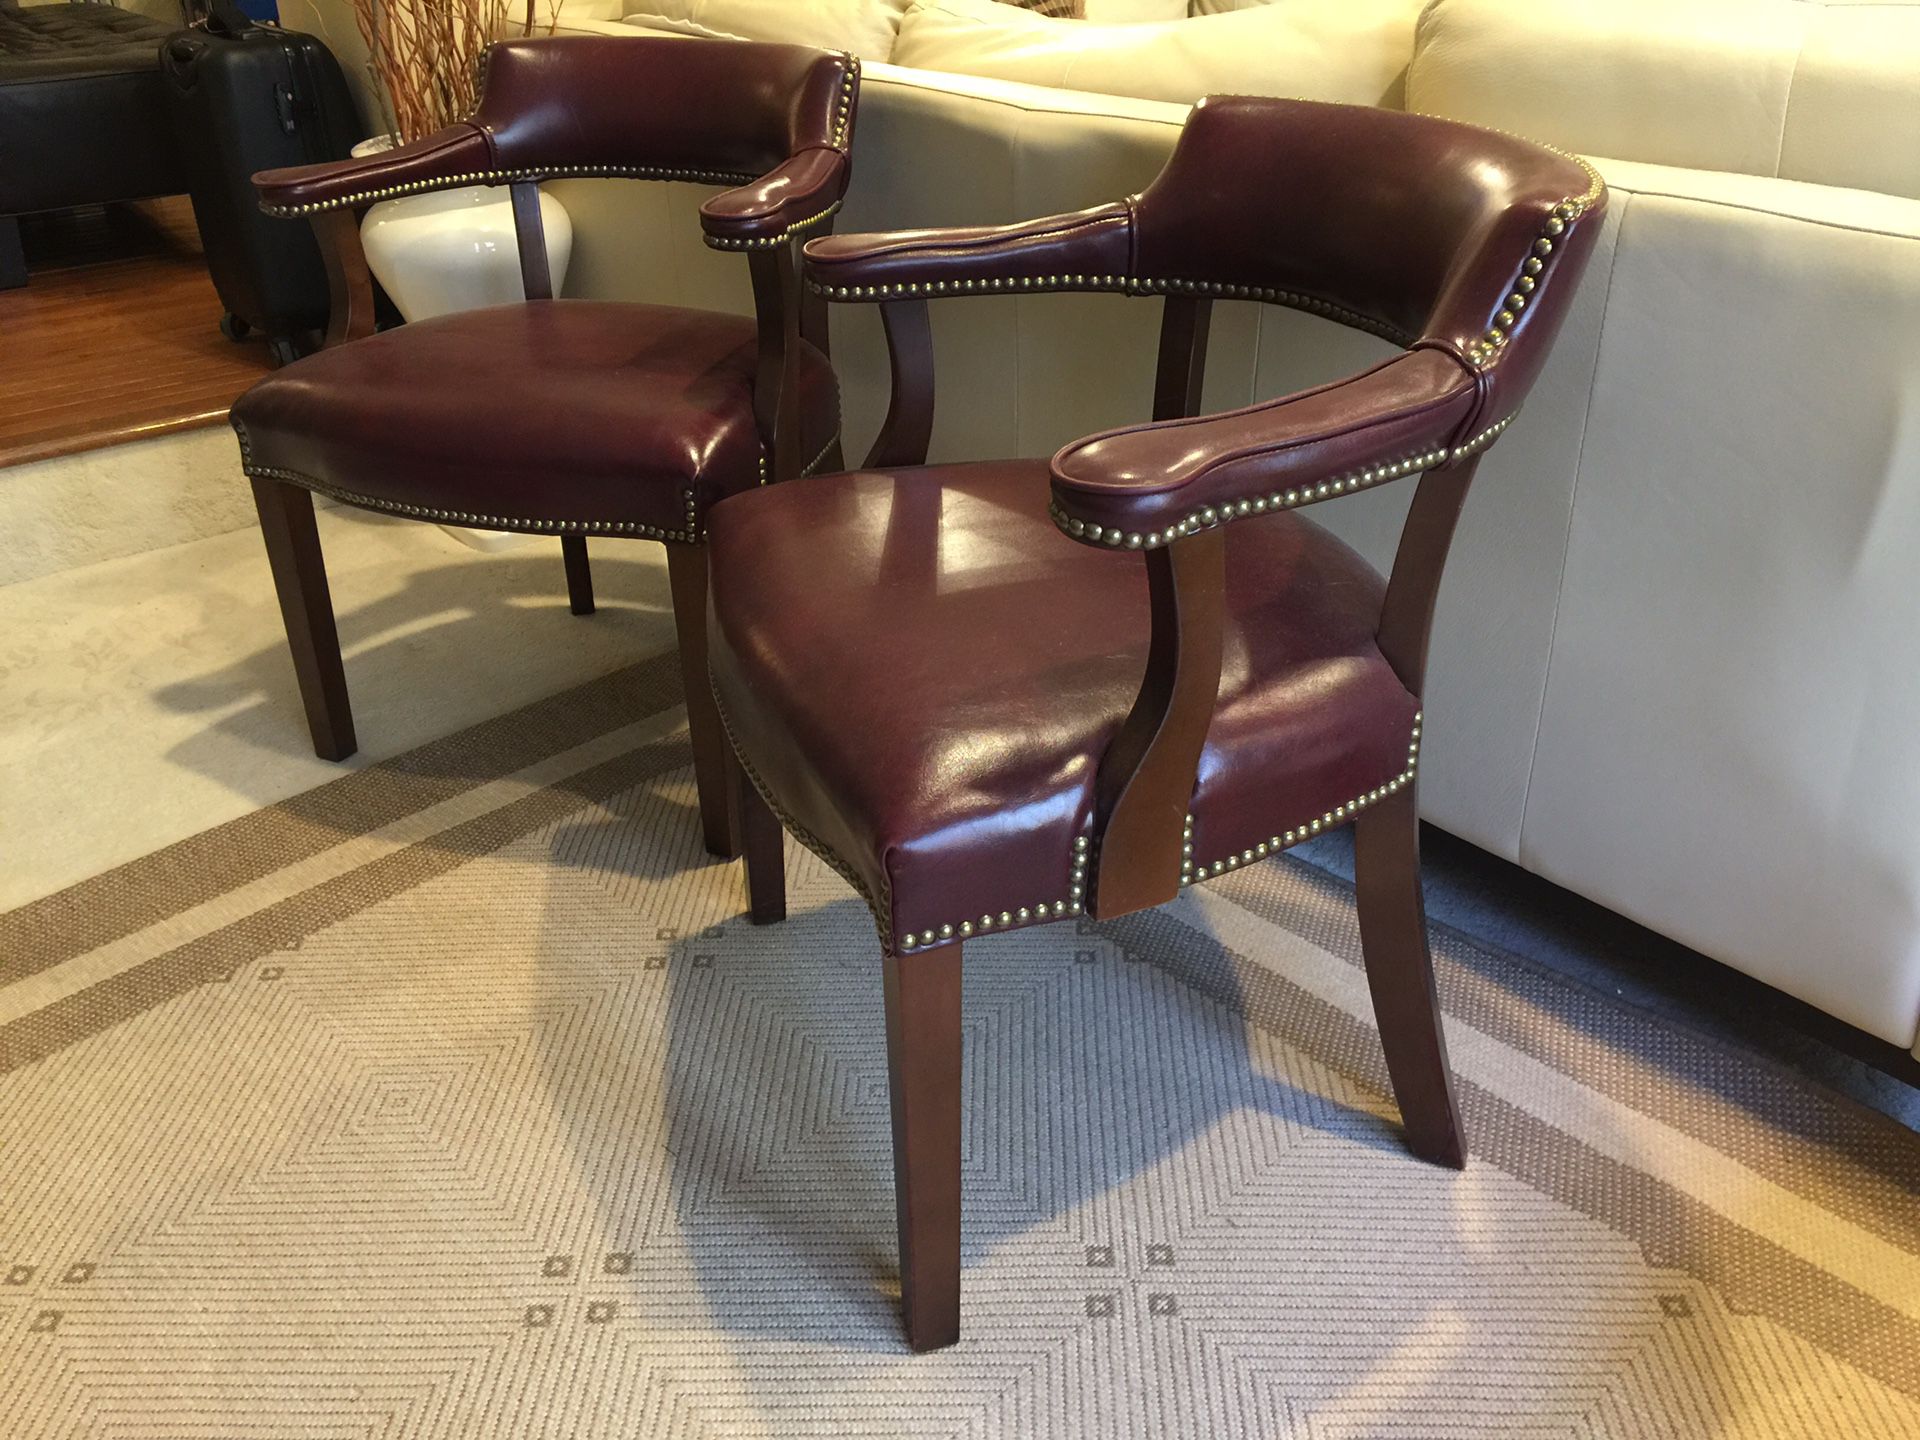 Leather Armchair Set